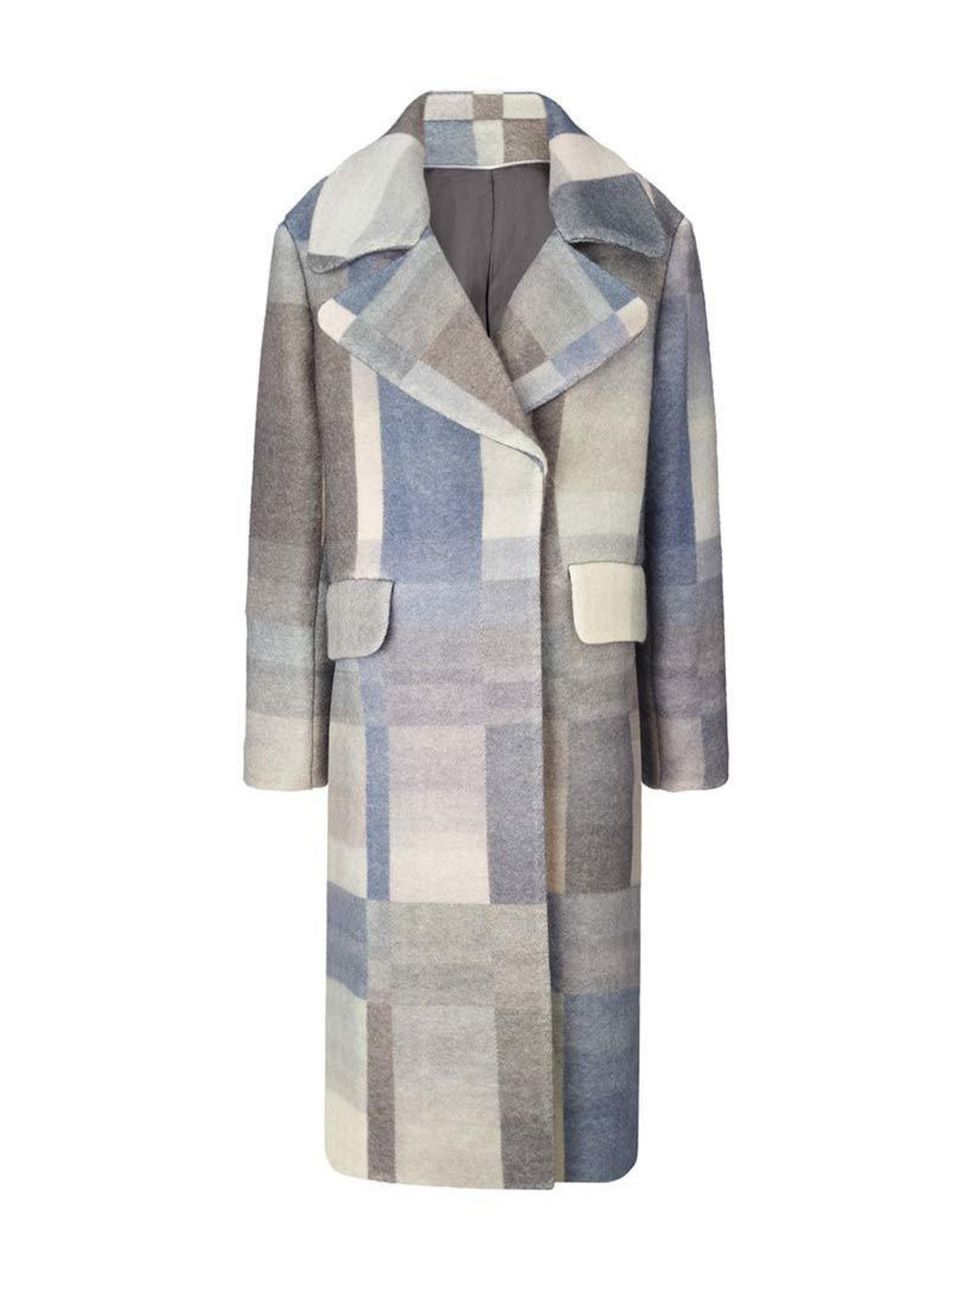 <p>Part modern minimalism, part technicolour dreamcoat.</p>

<p><a href="http://www.whistles.com/women/clothing/coats-jackets/hoshi-check-coat.html?dwvar_hoshi-check-coat_color=Multicolour" target="_blank">Whistles</a> coat, £450</p>